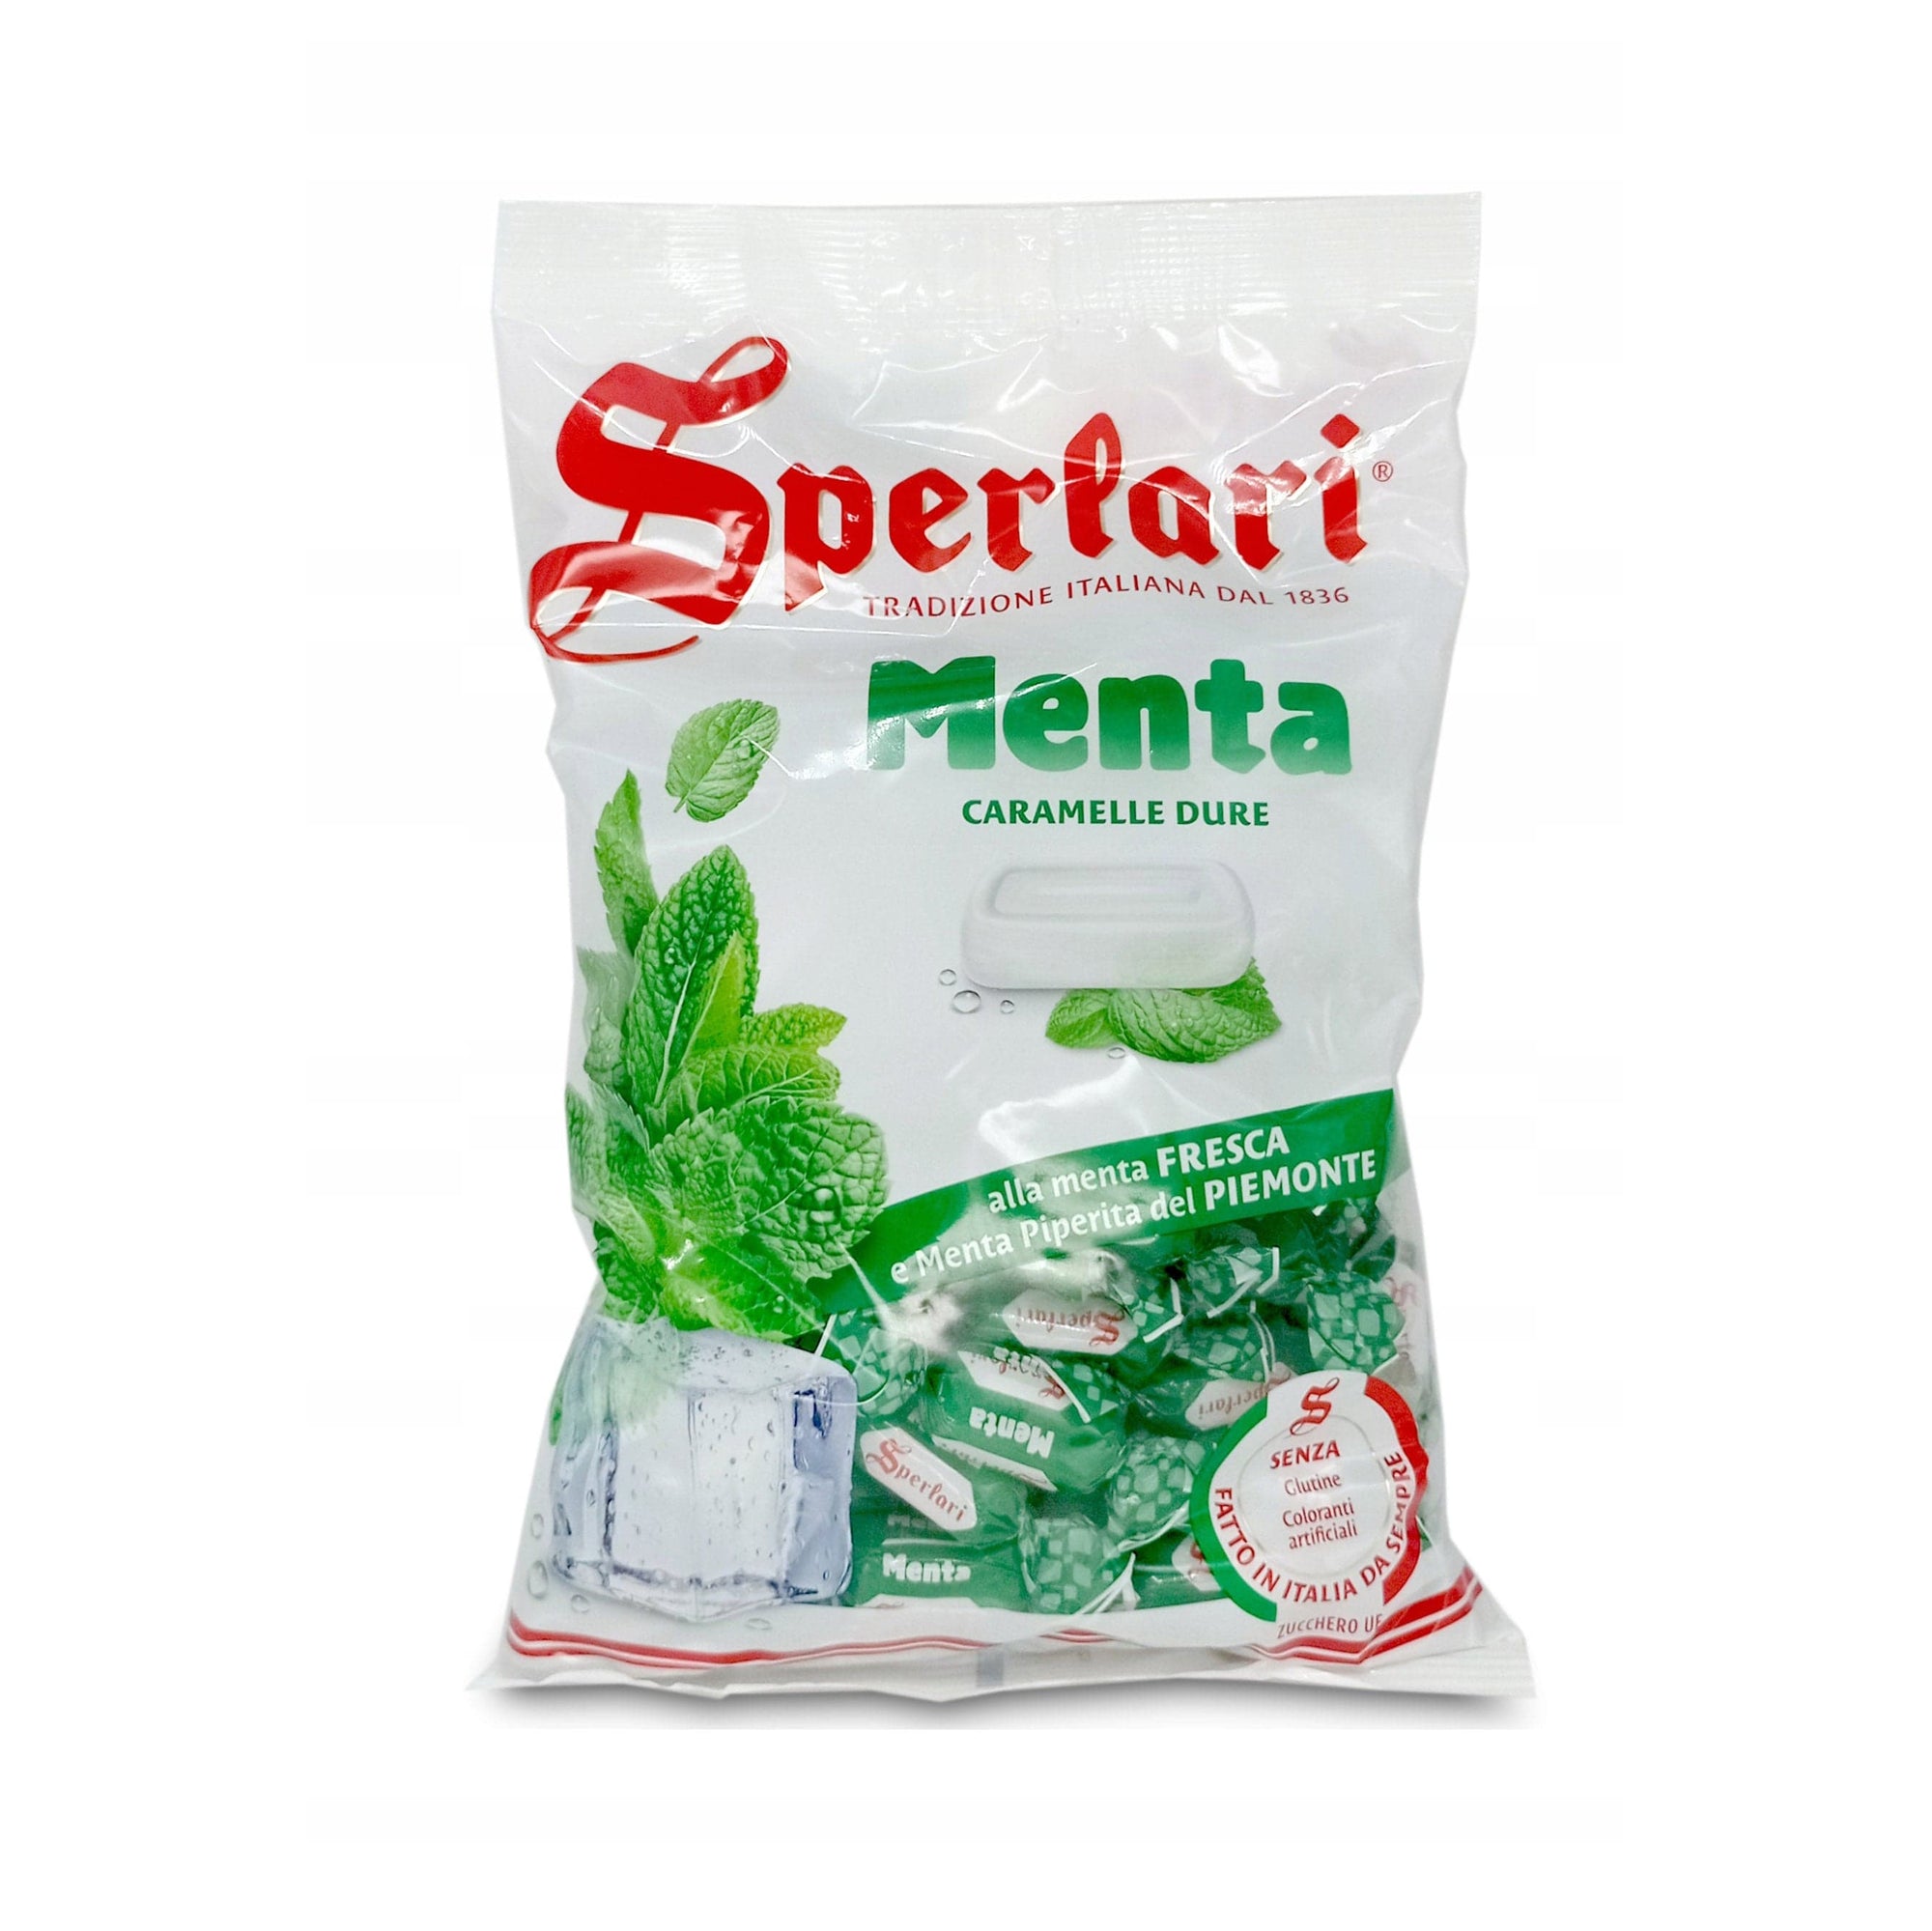 Gourmet International Sperlari Menta Mint Hard Boiled Candy